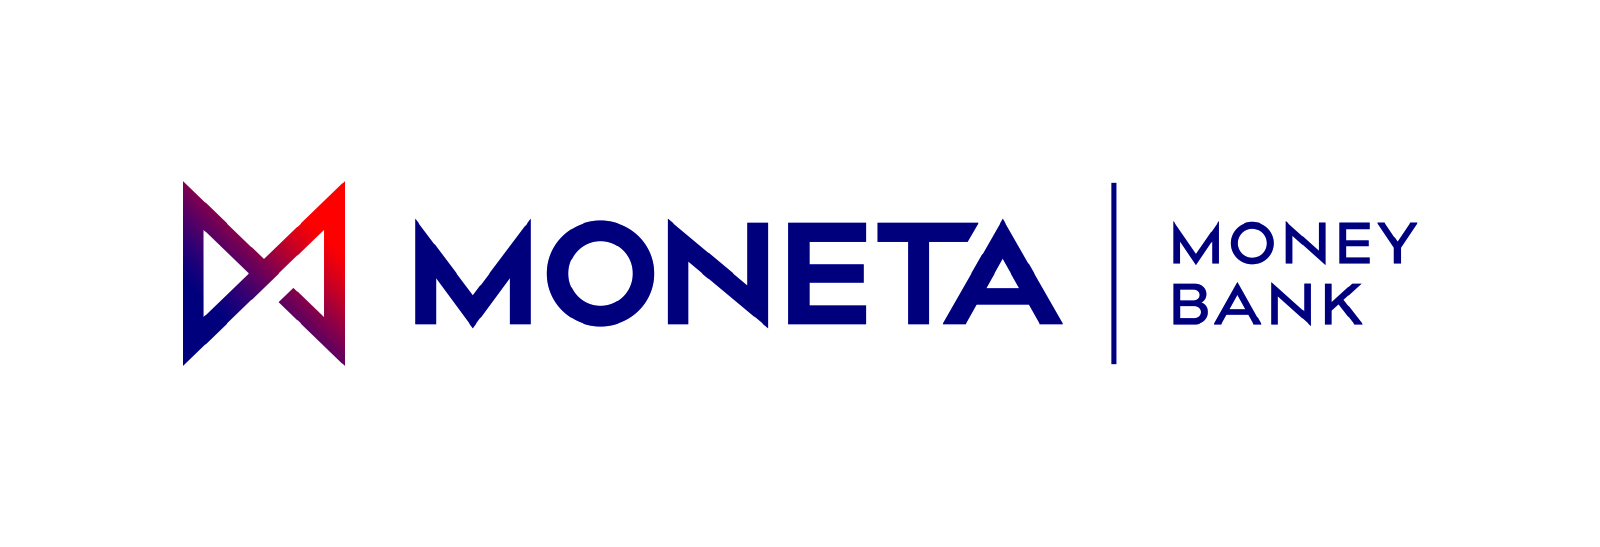 logo_moneta_money_bank.jpg